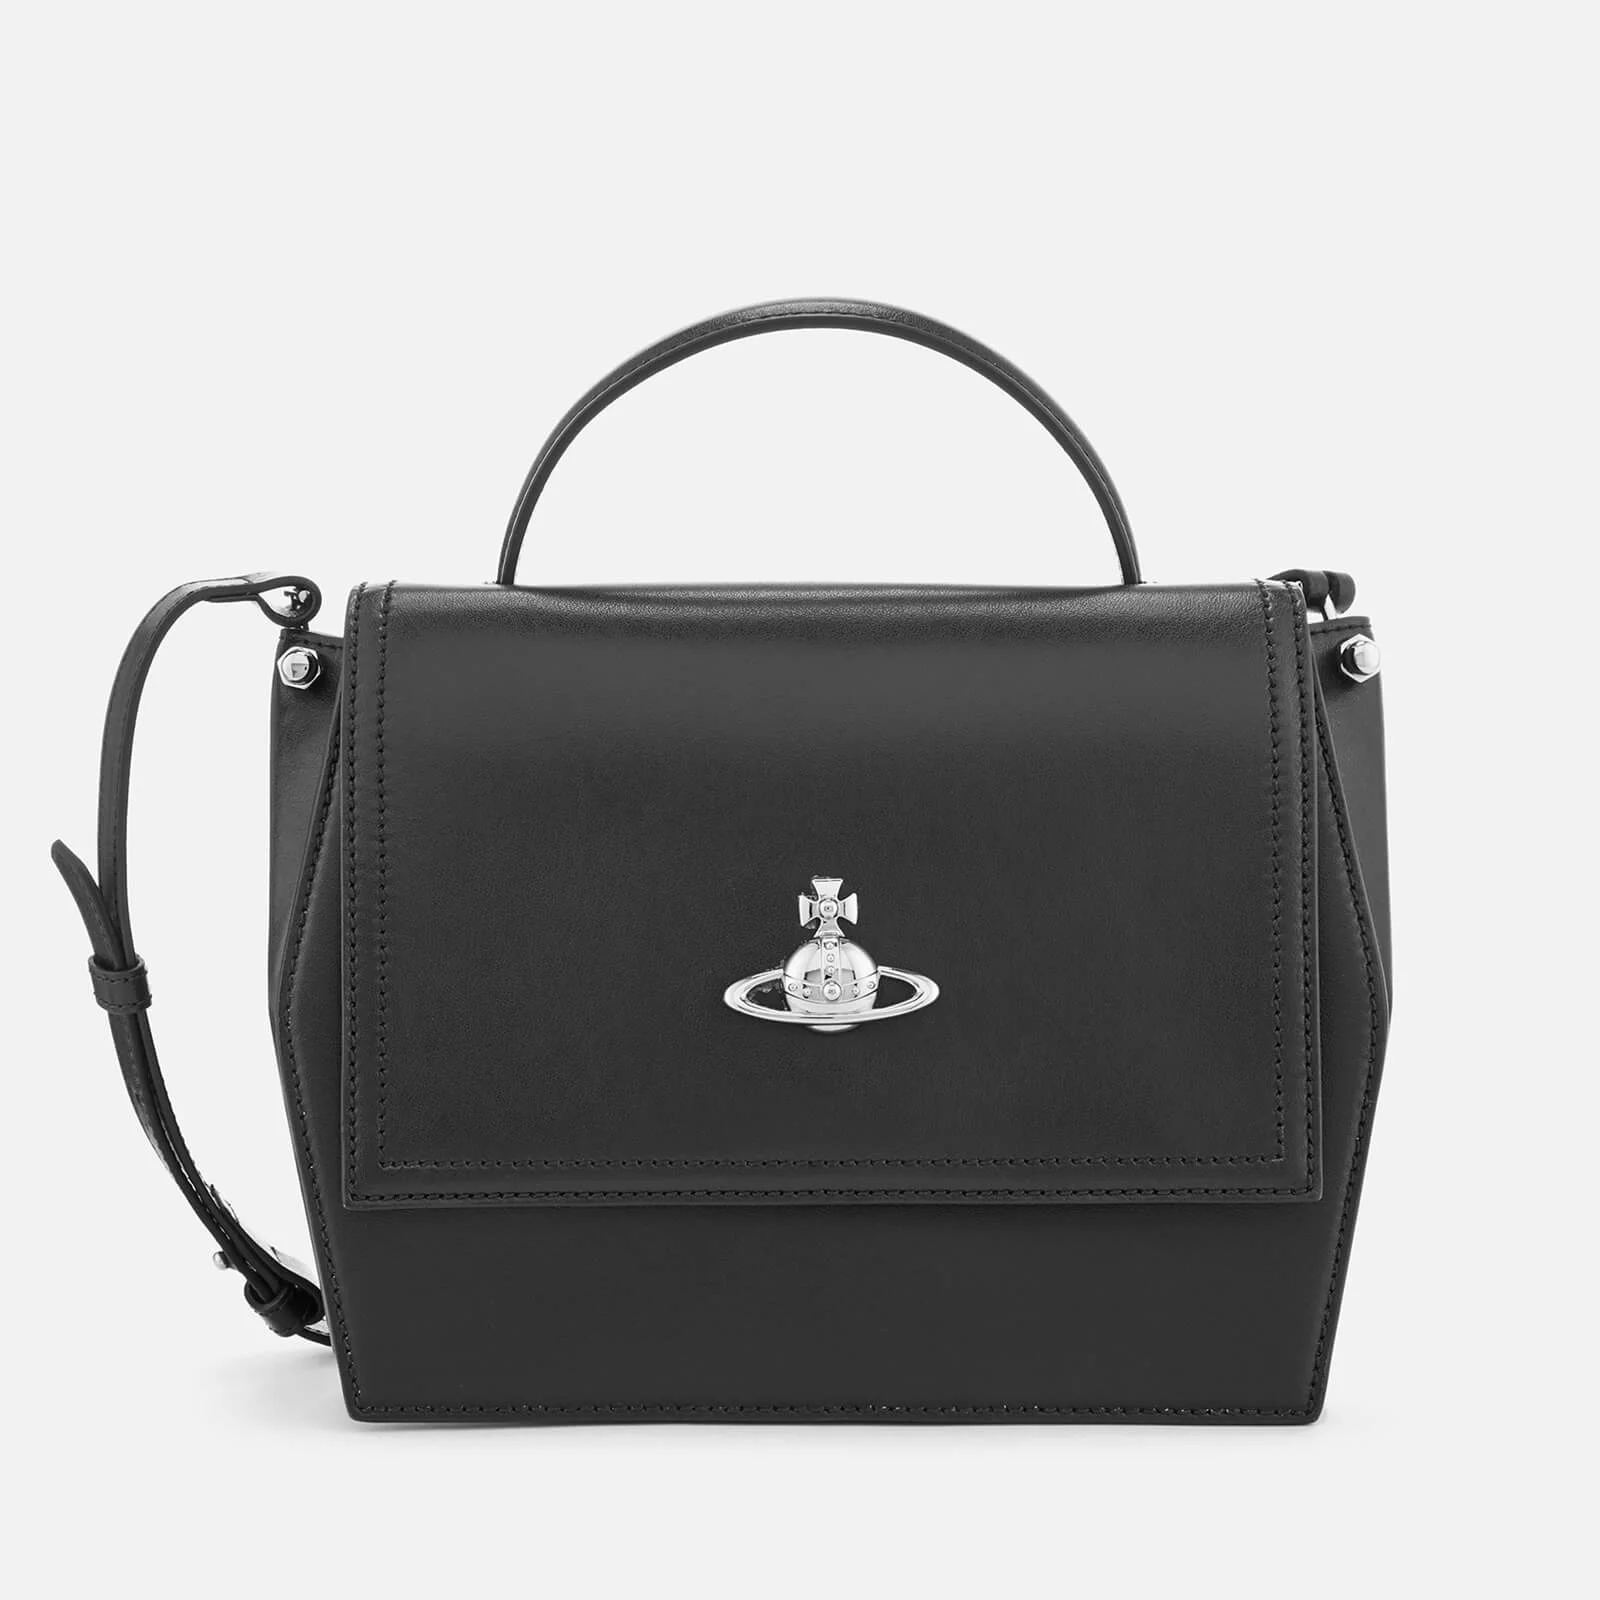 Vivienne Westwood Women's Cambridge Handbag - Black Image 1